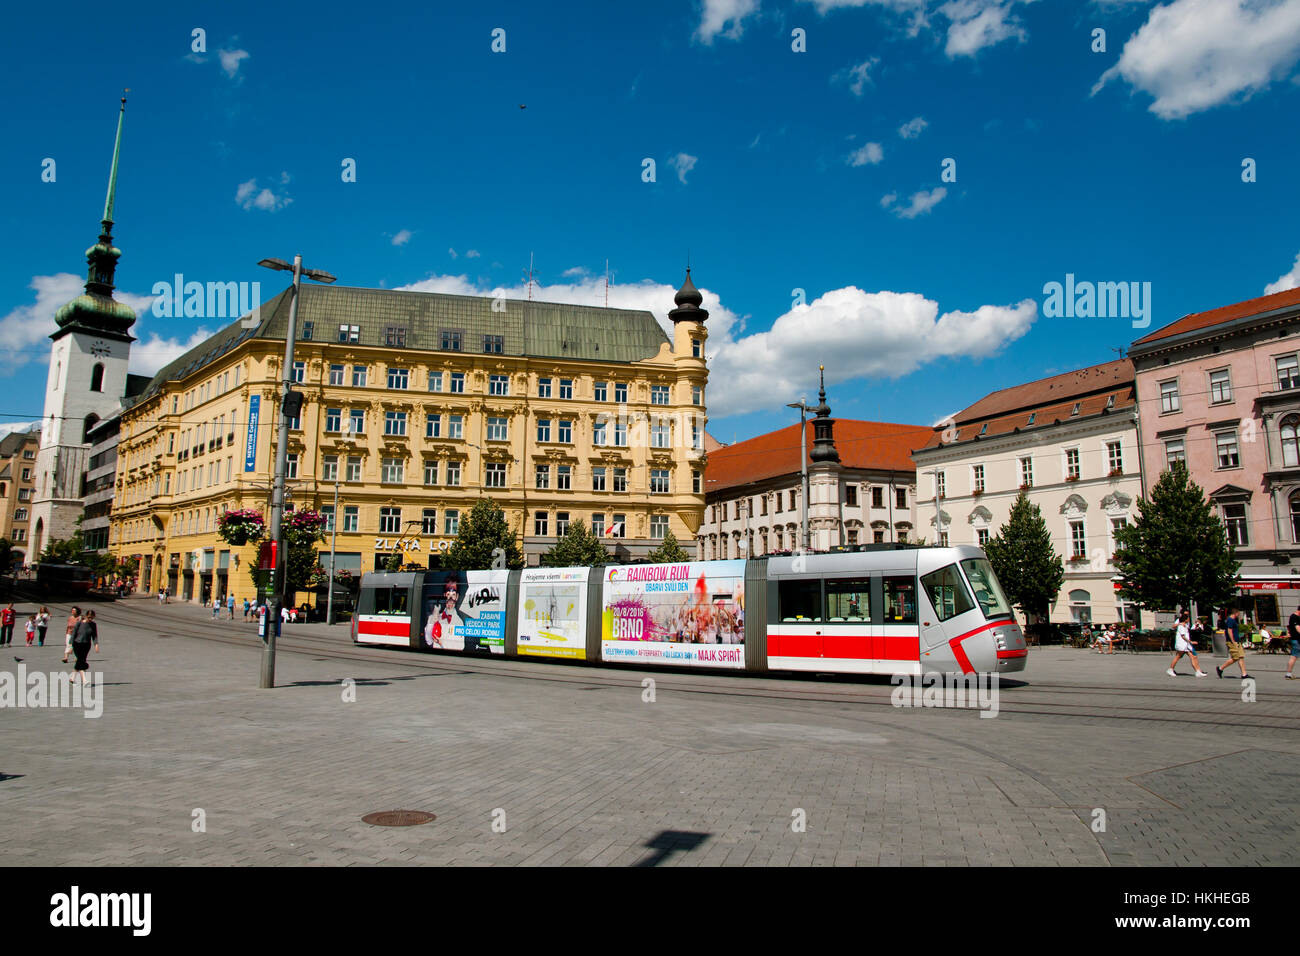 City Tram - Brno - Czech Republic Stock Photo